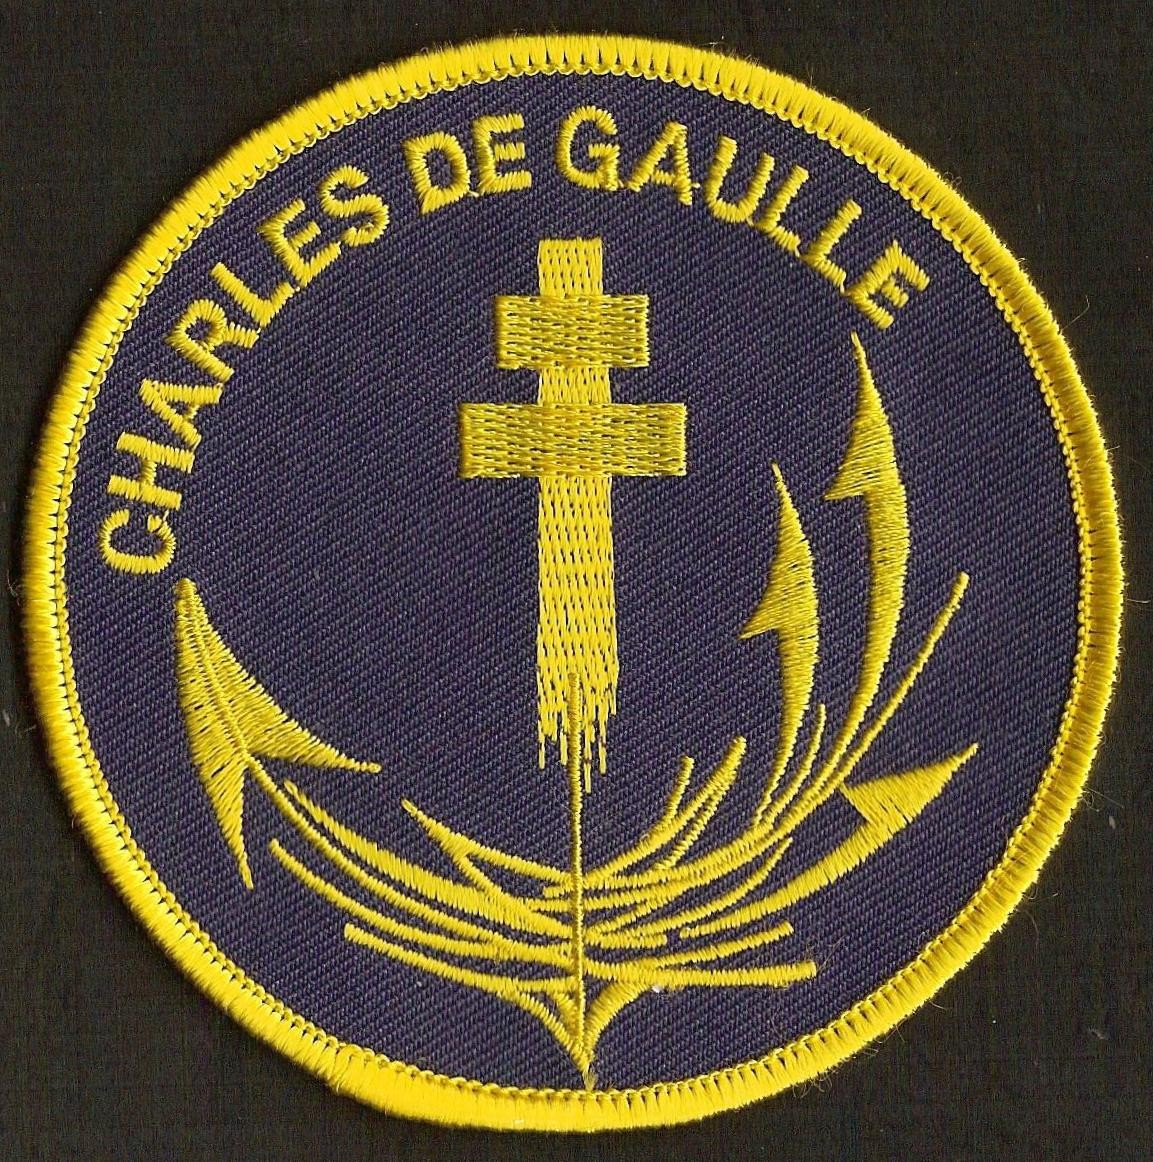 PA Charles de Gaulle - logo - mod 2